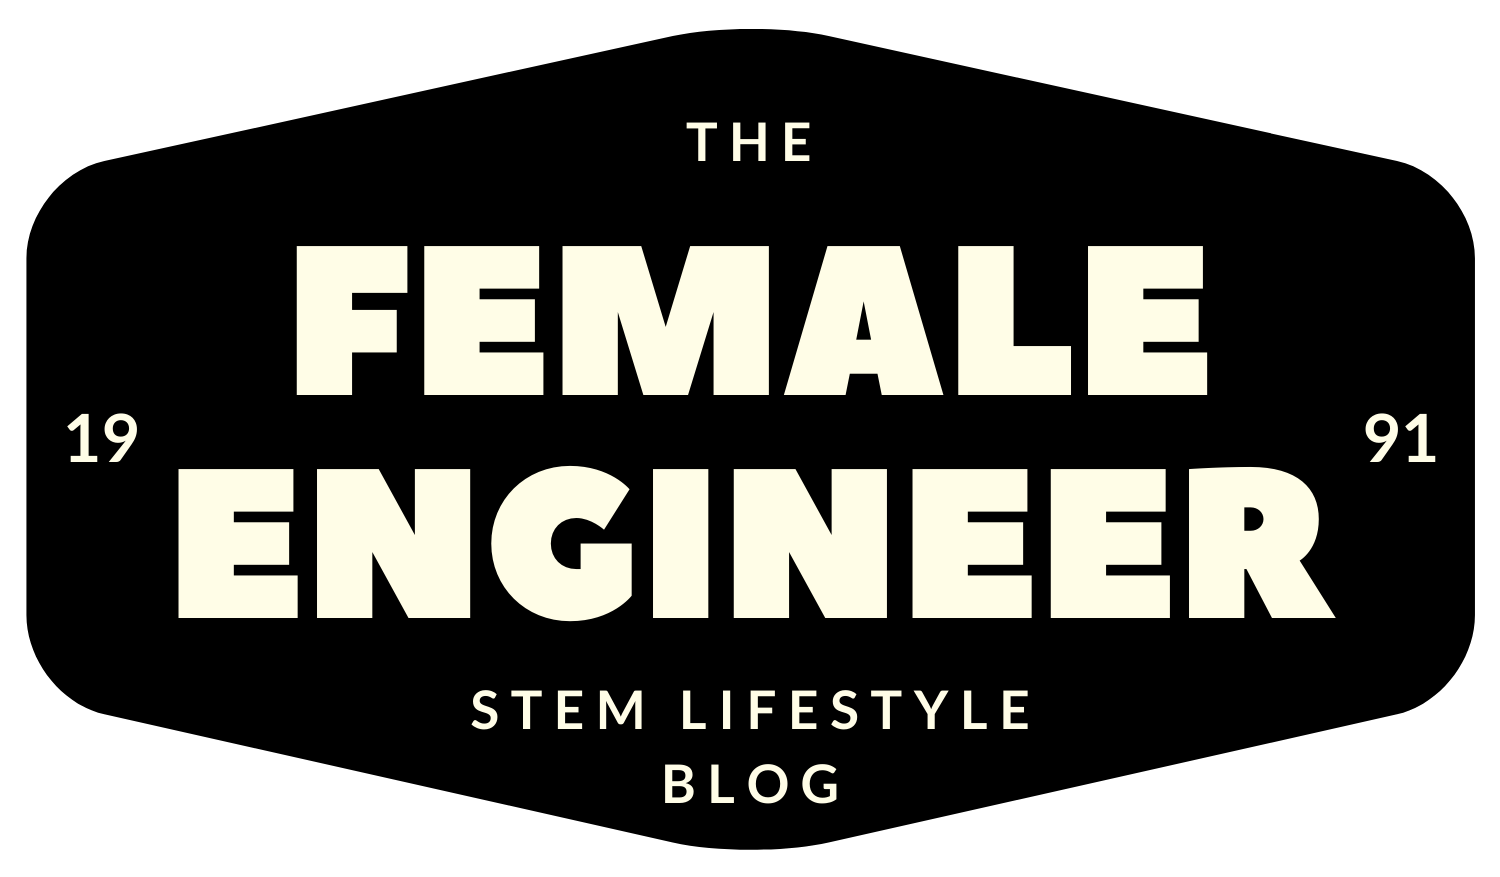 The Female Engineer